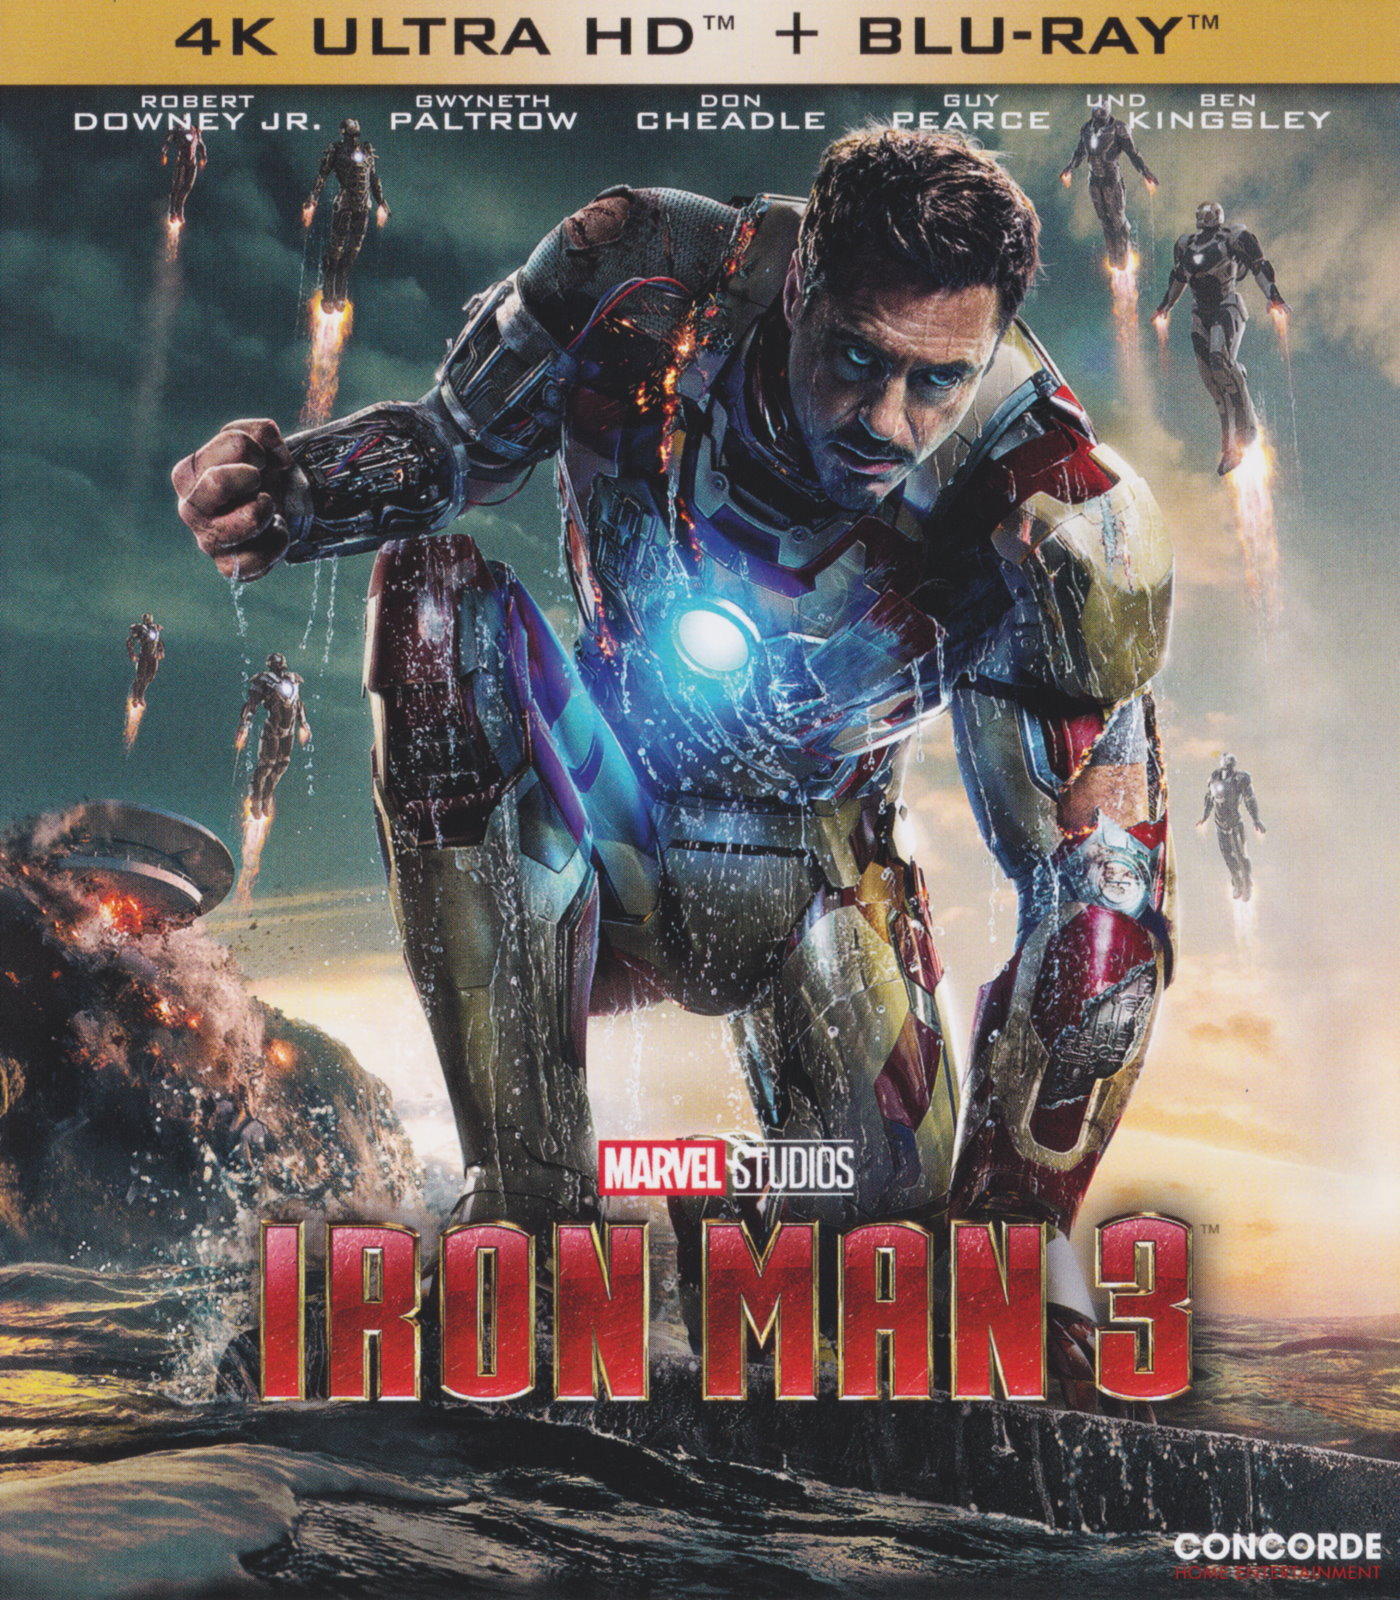 Cover - Iron Man 3.jpg